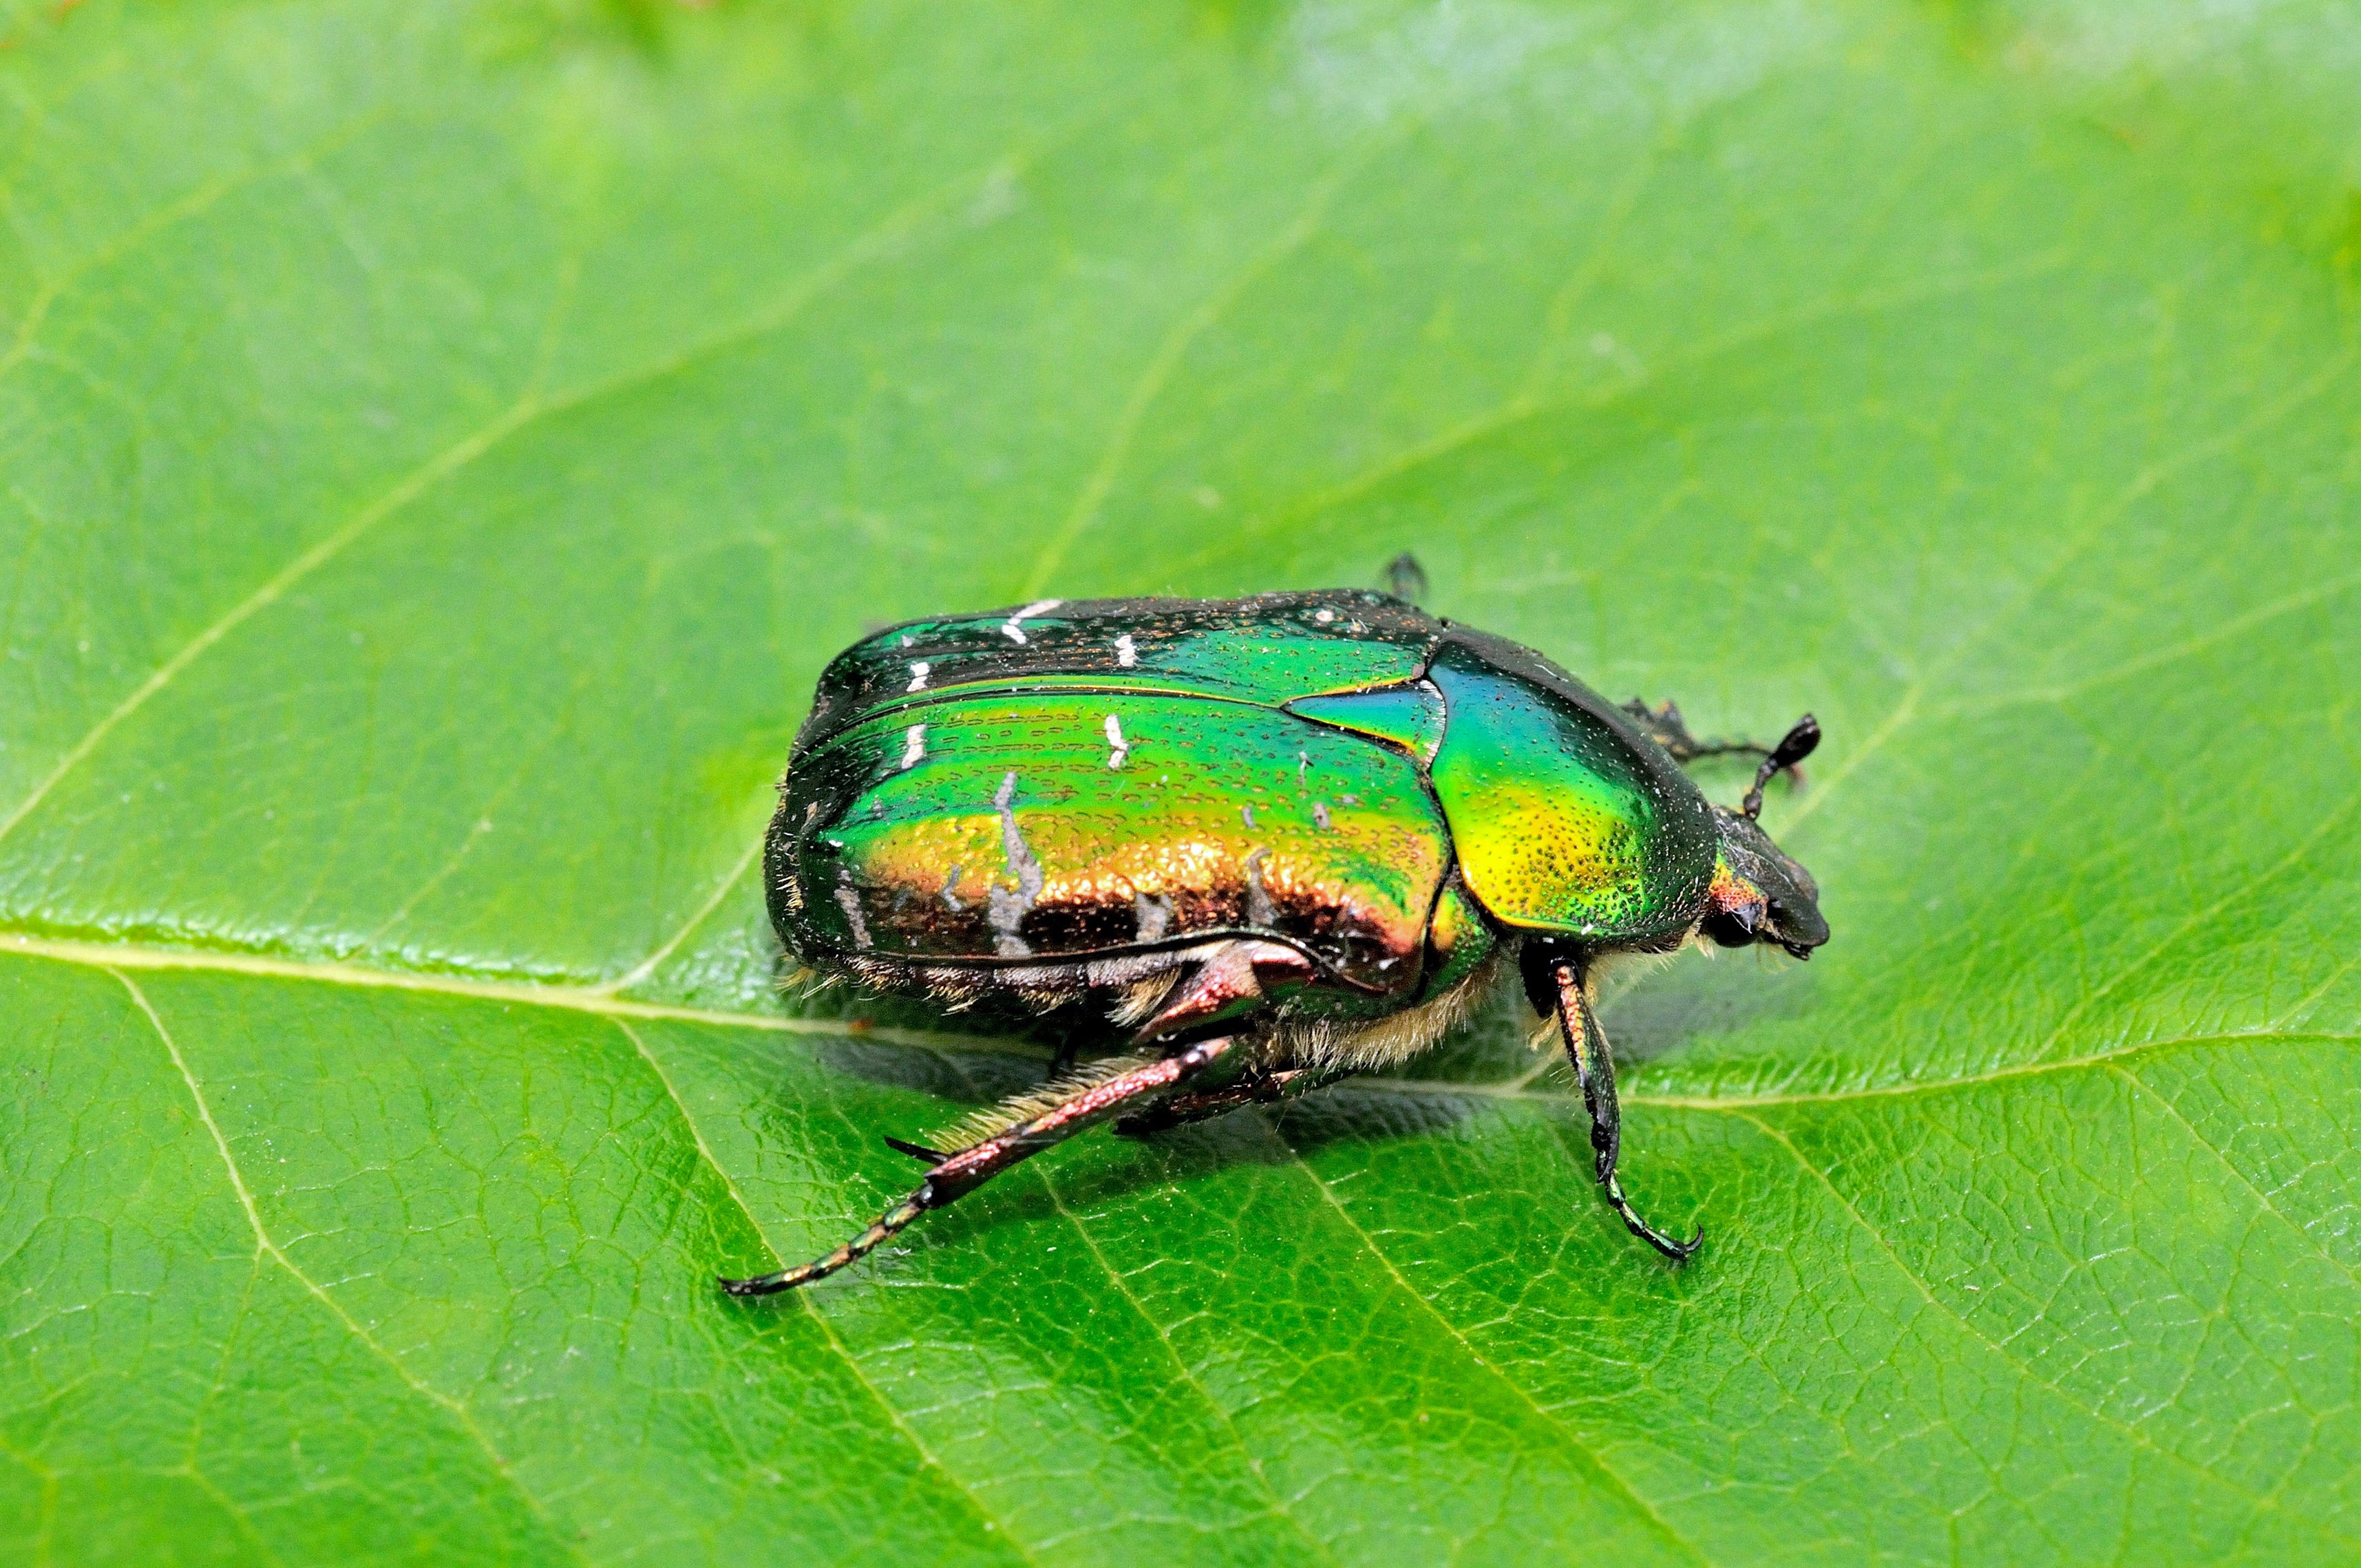 Rose chafer beetle (Alamy/PA)